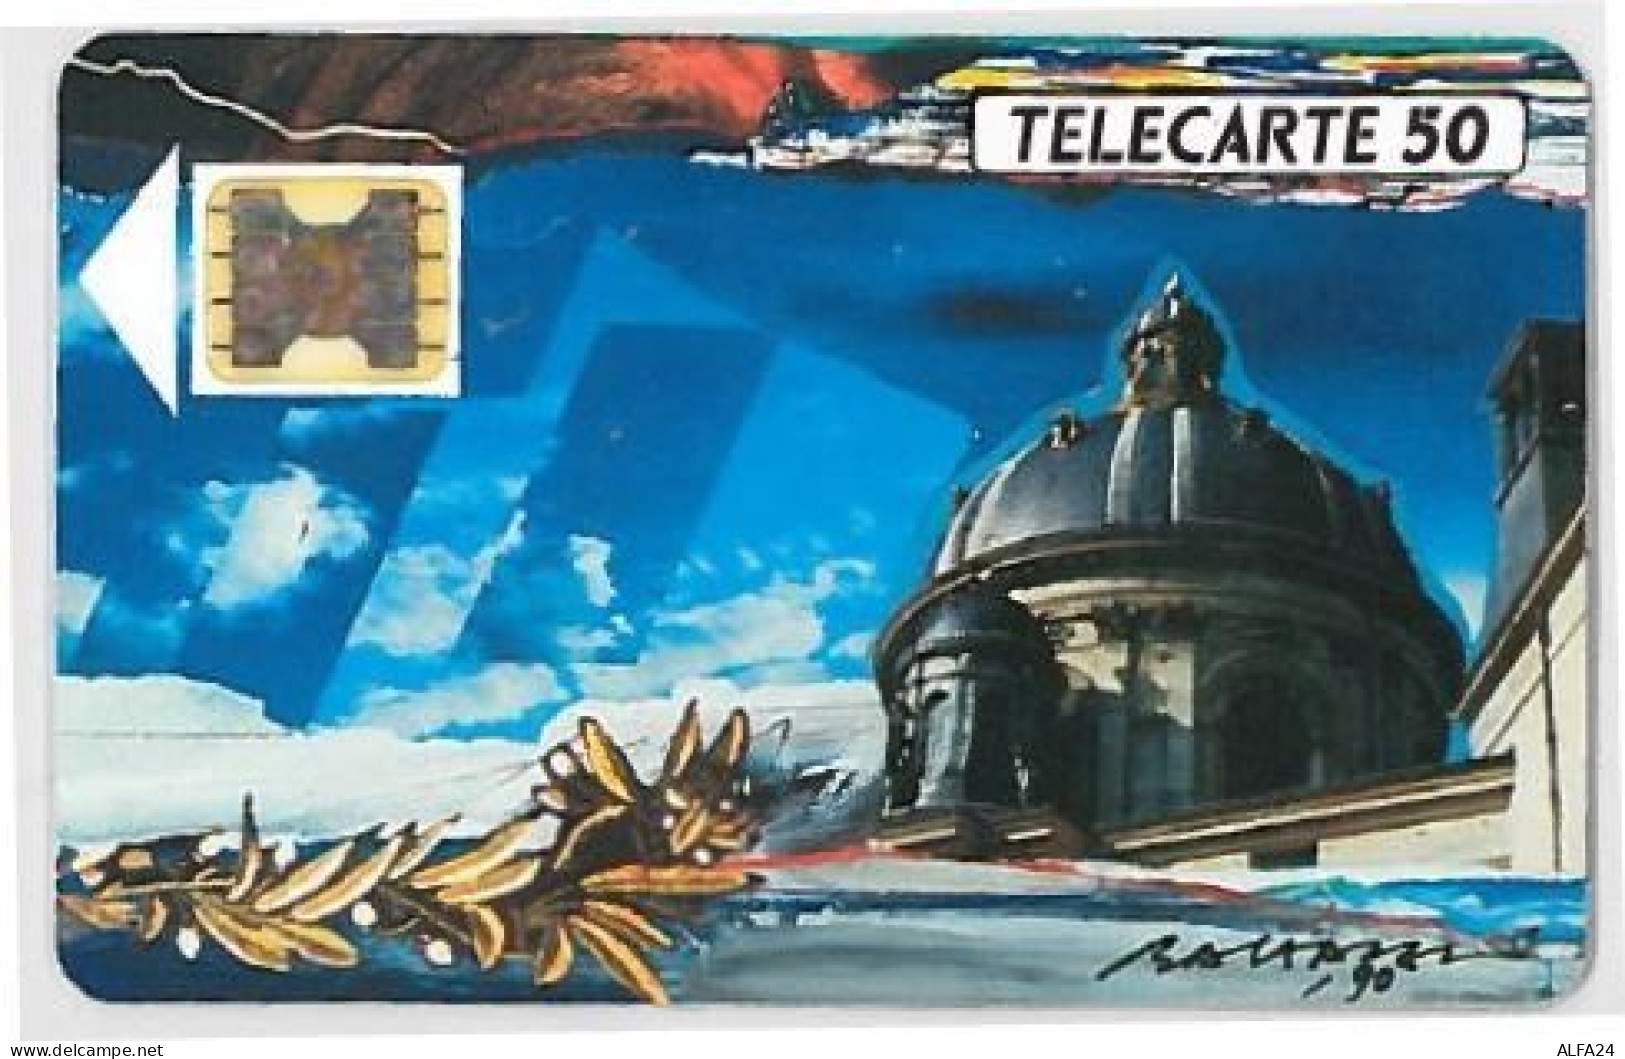 TELECARTE F115 LA COUPOLE - 1991